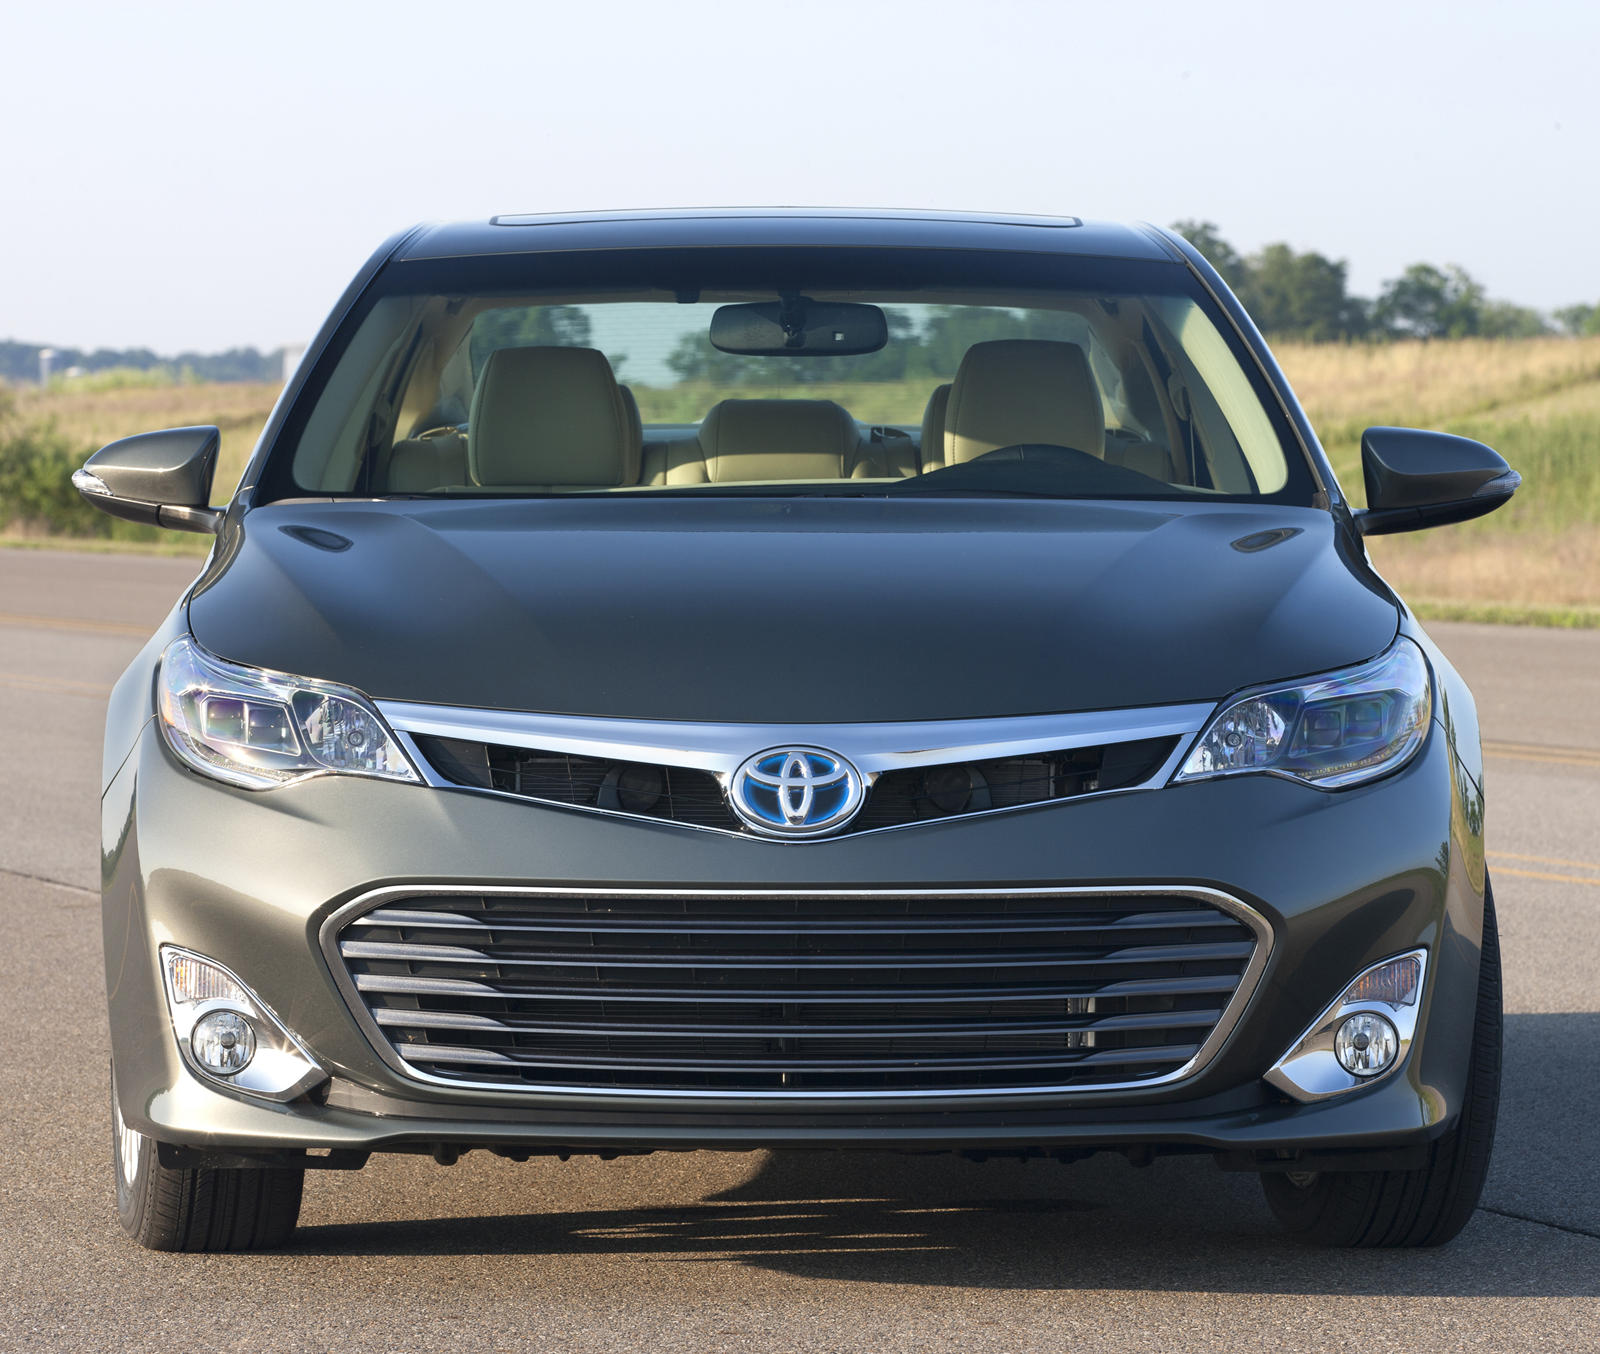 2014 Toyota Avalon Hybrid Front View